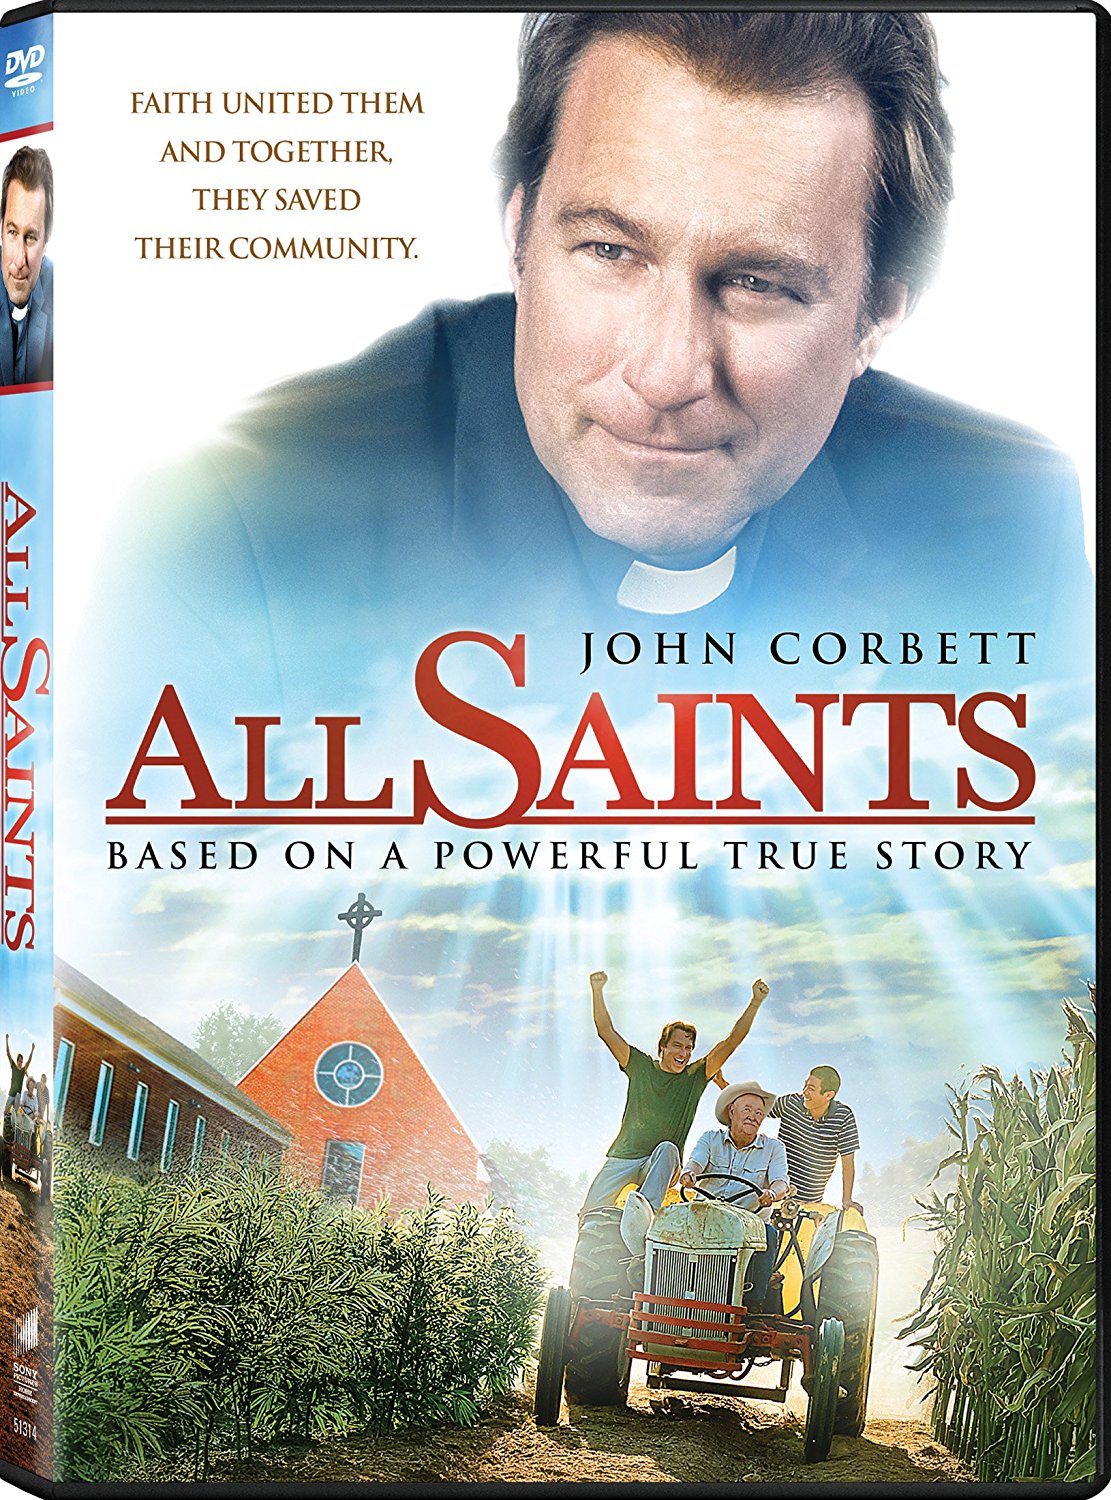 New on DVD & Blu-ray: ALL SAINTS (2017) Starring John Corbett | The ...